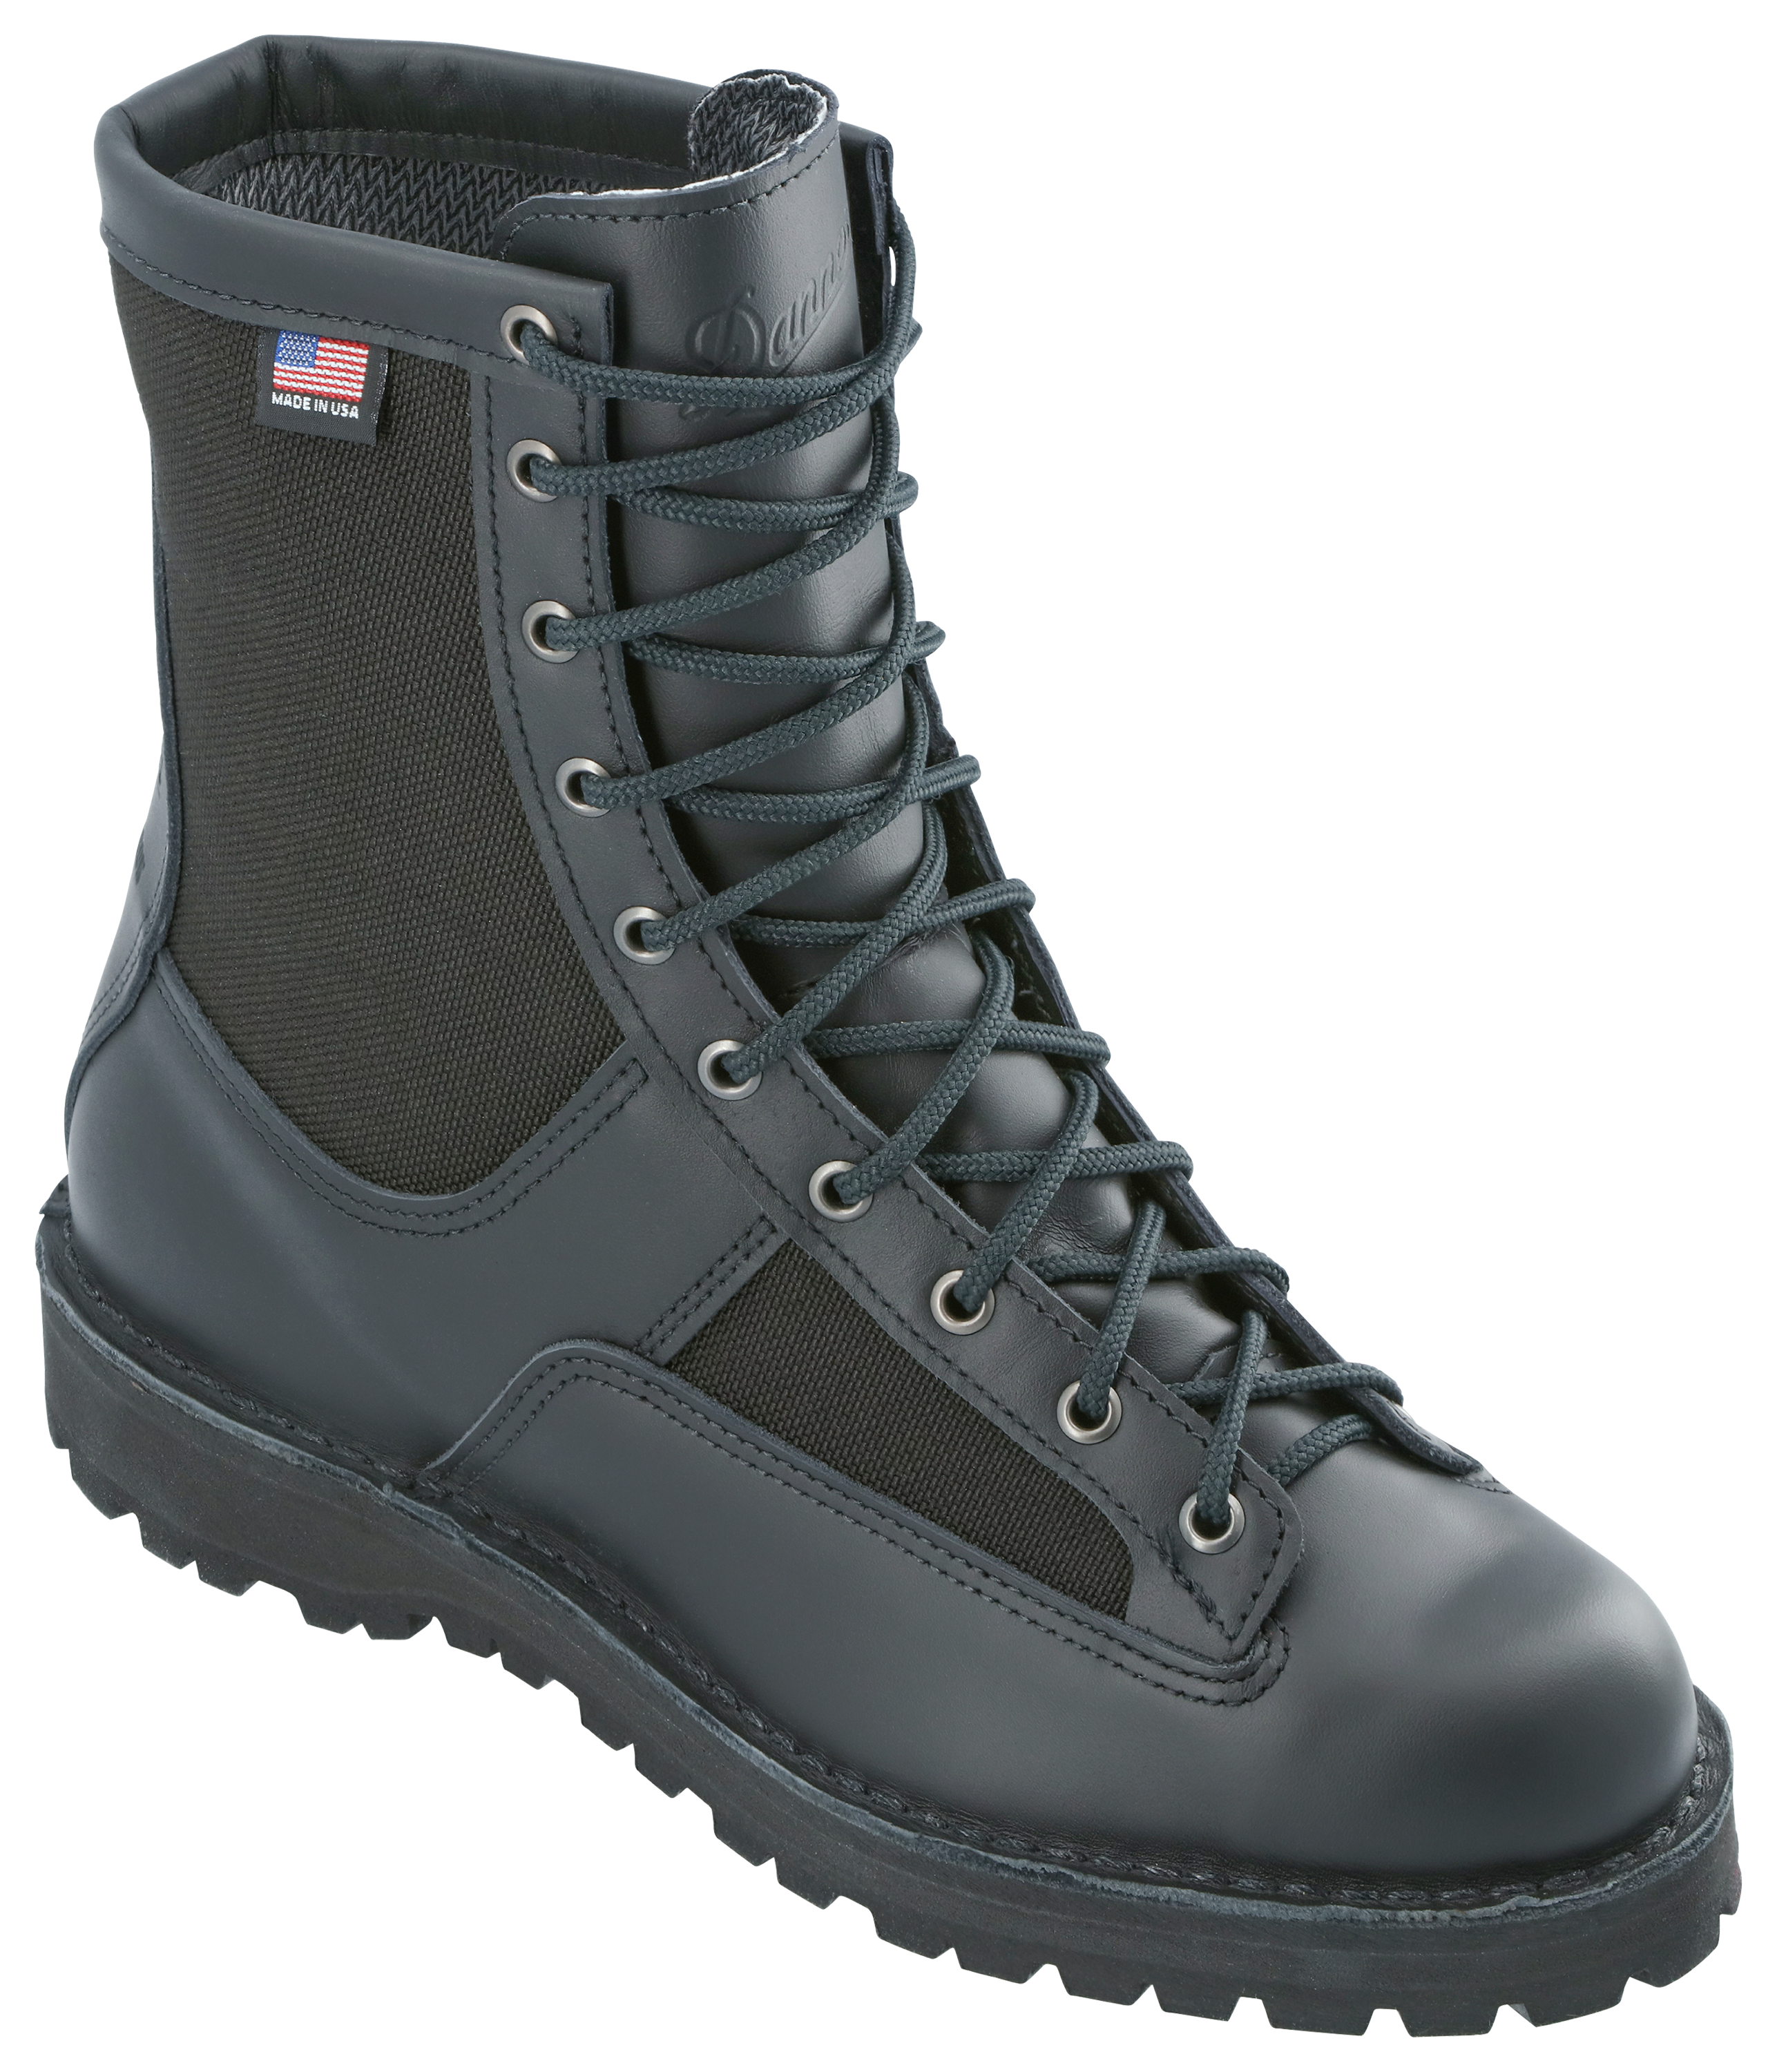 Danner Acadia GORE-TEX Duty Boots for Men - Black - 11.5M